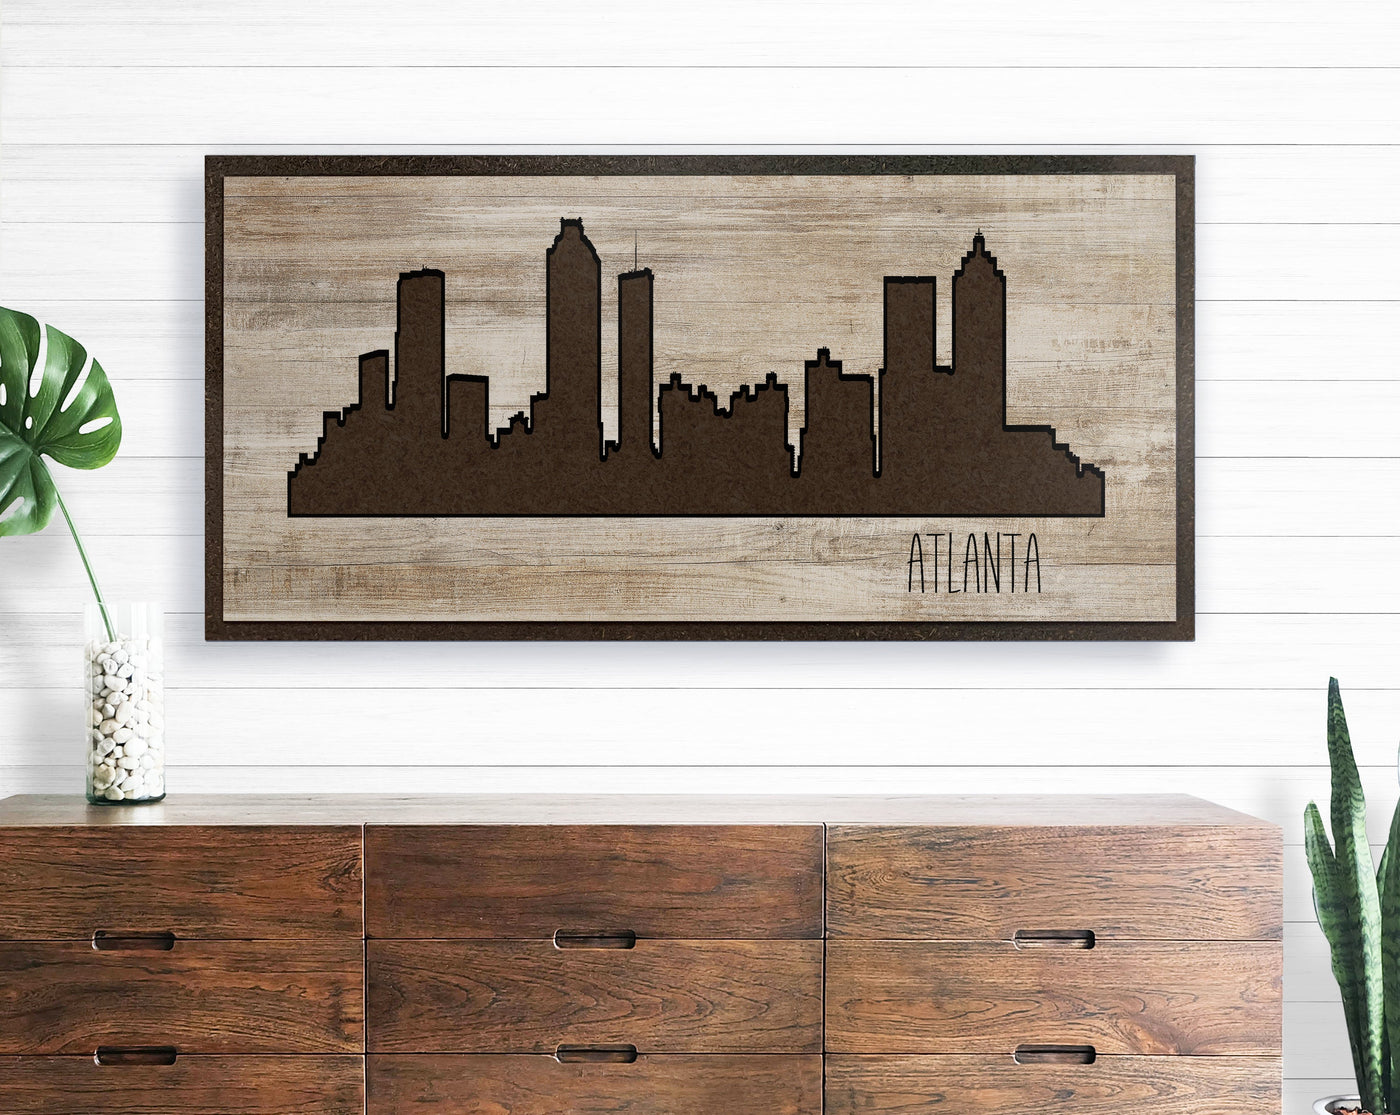 Atlanta, Georgia City Skyline Image